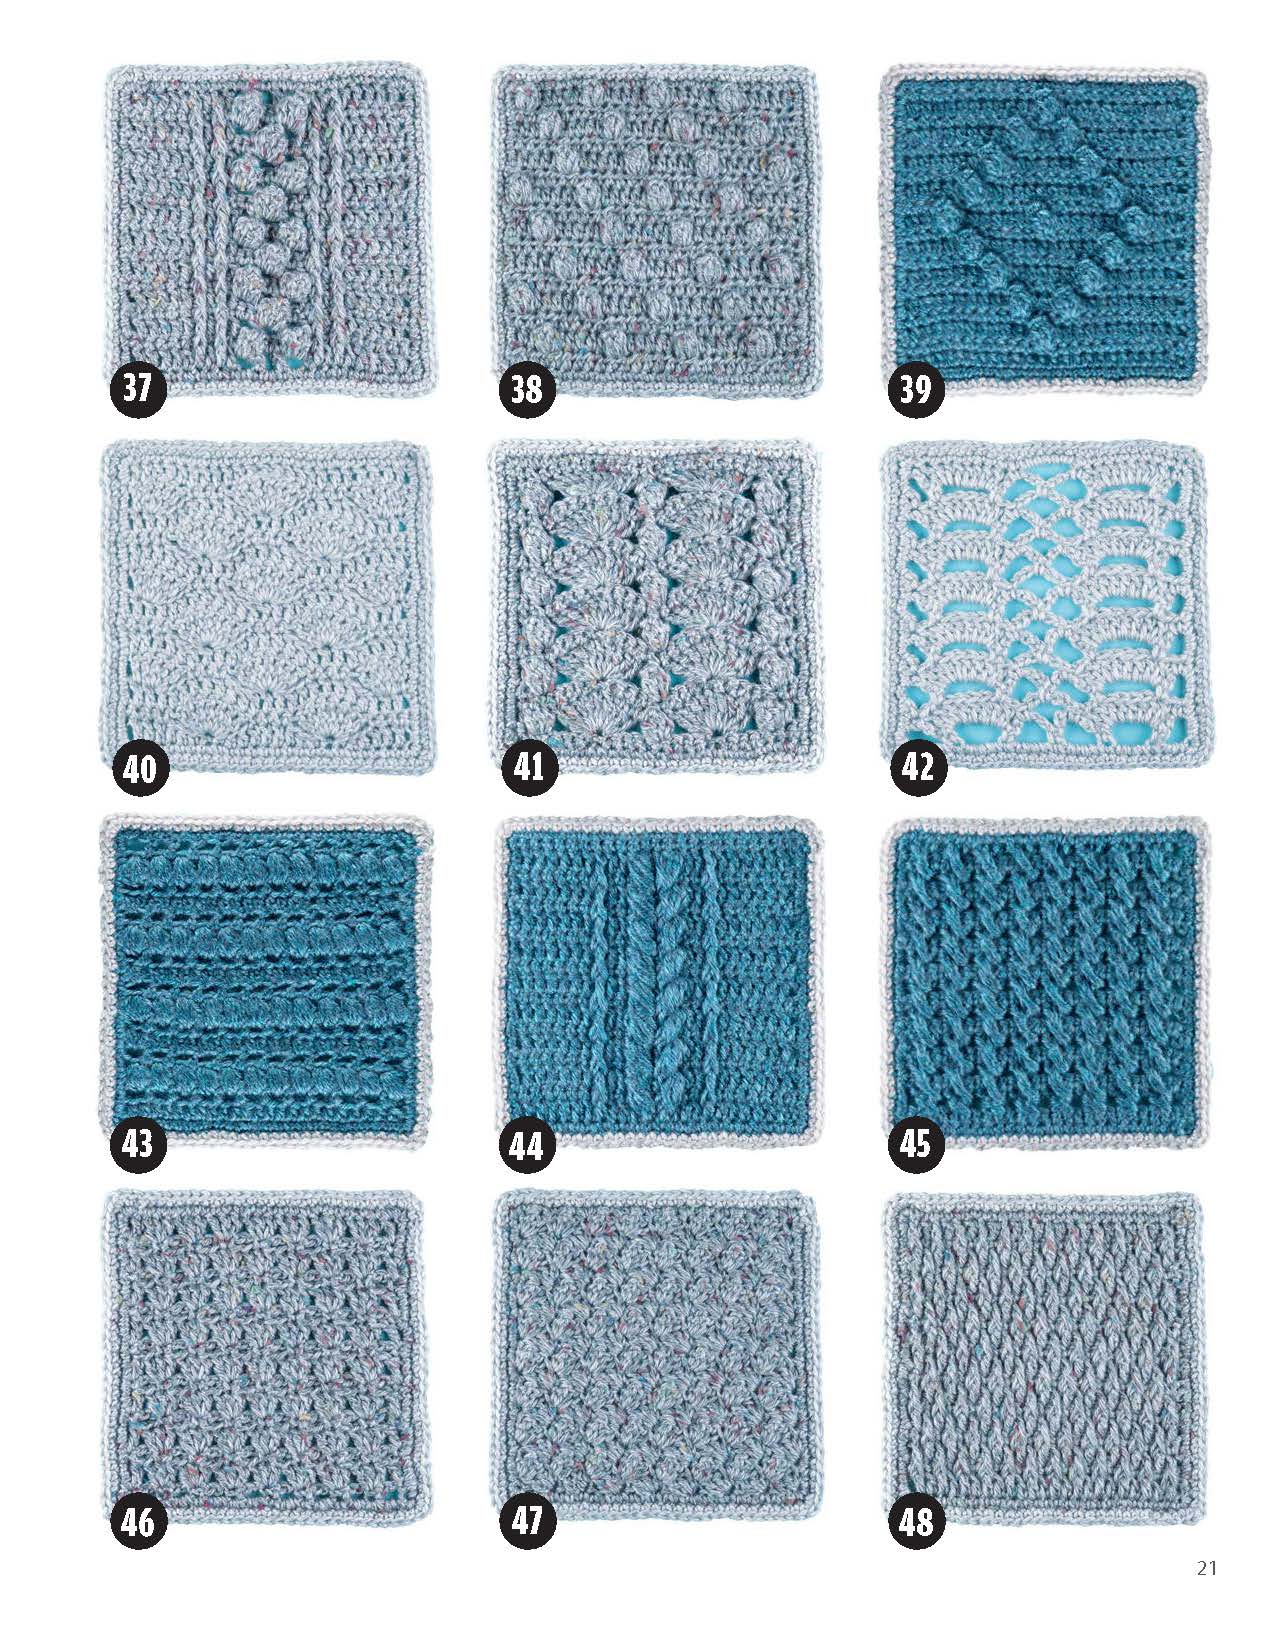 Leisure Arts 108 Crochet Cluster Stitches Crochet Book